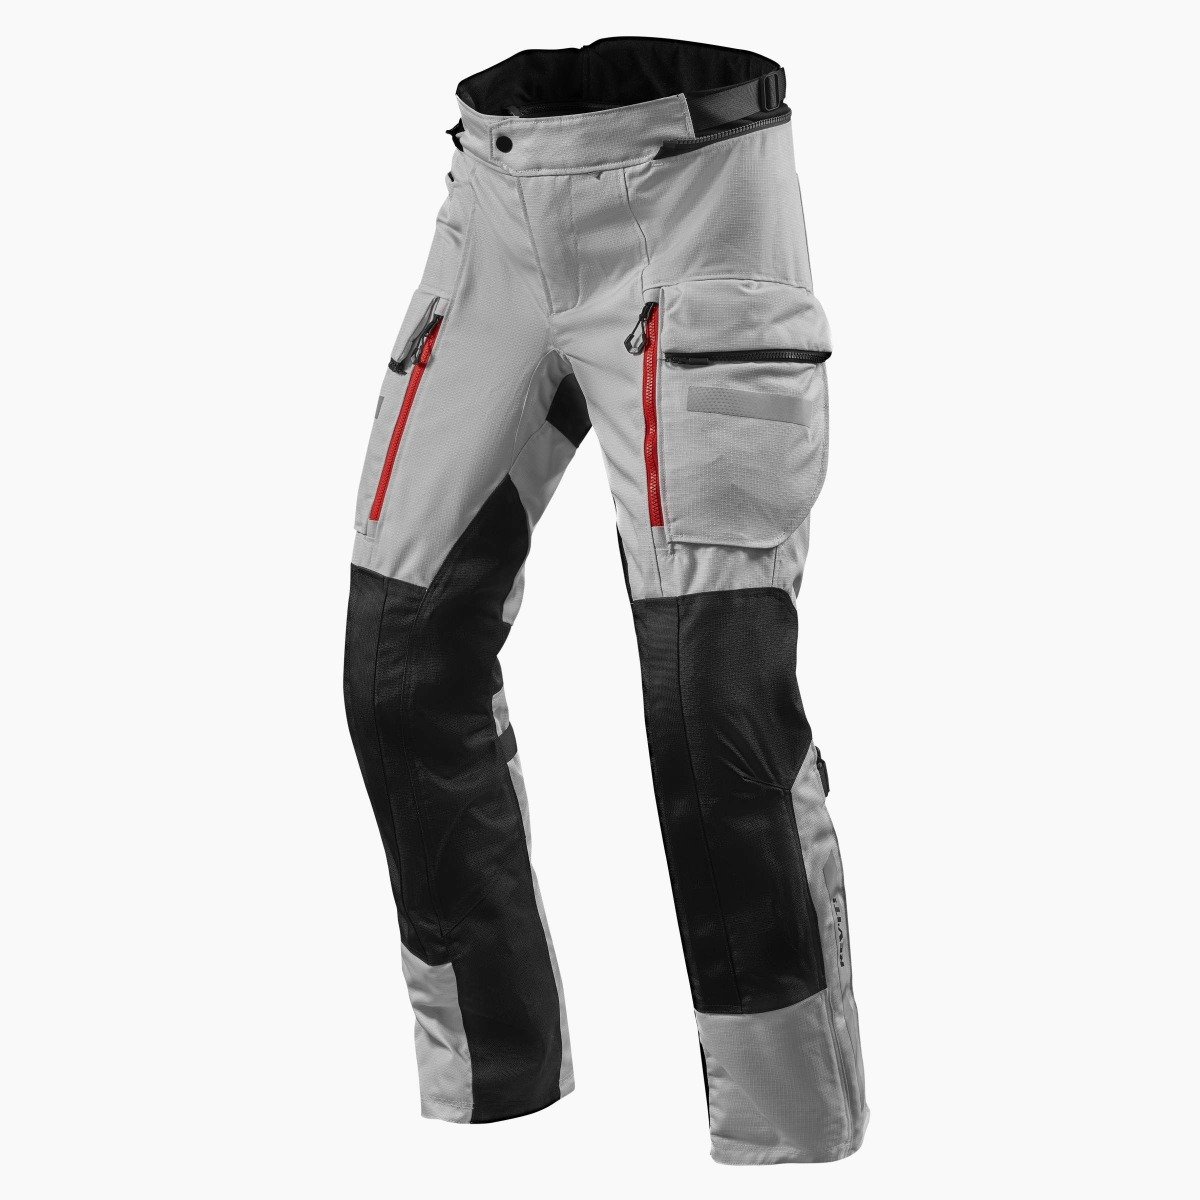 Image of REV'IT! Sand 4 H2O Long Silver Black Motorcycle Pants Size 2XL EN